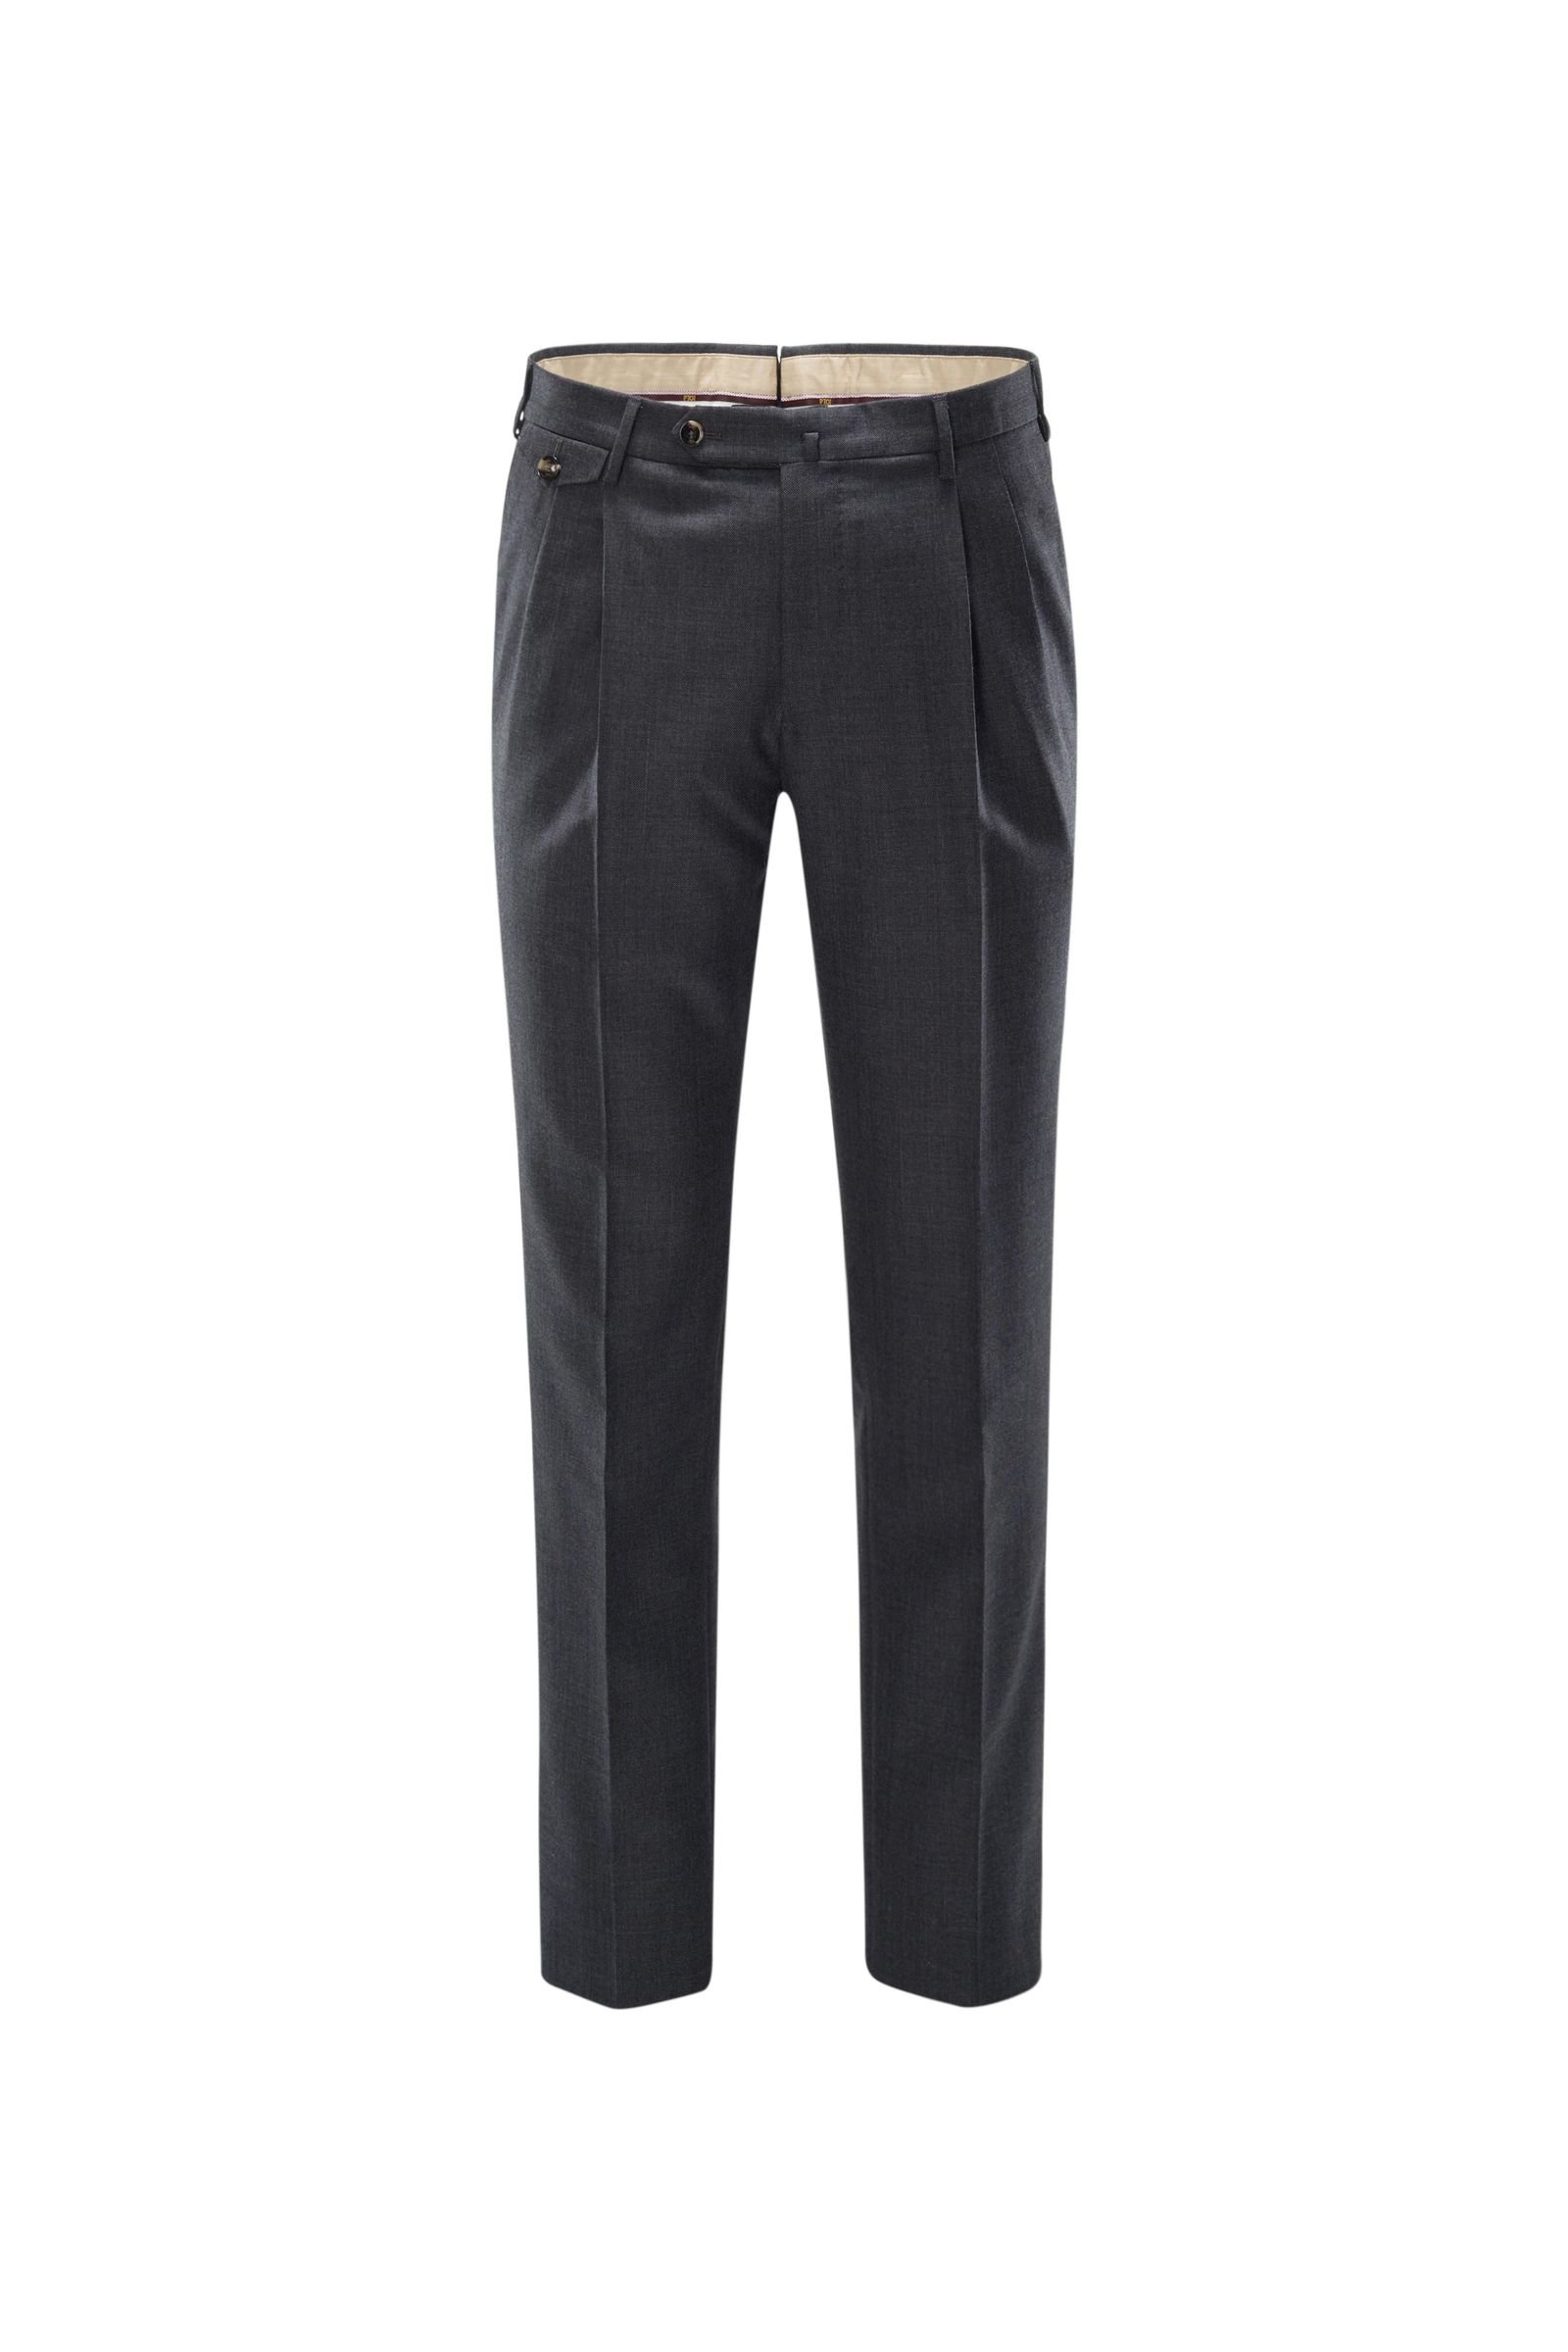 Wool trousers 'The Draper Gentleman Fit' dark grey